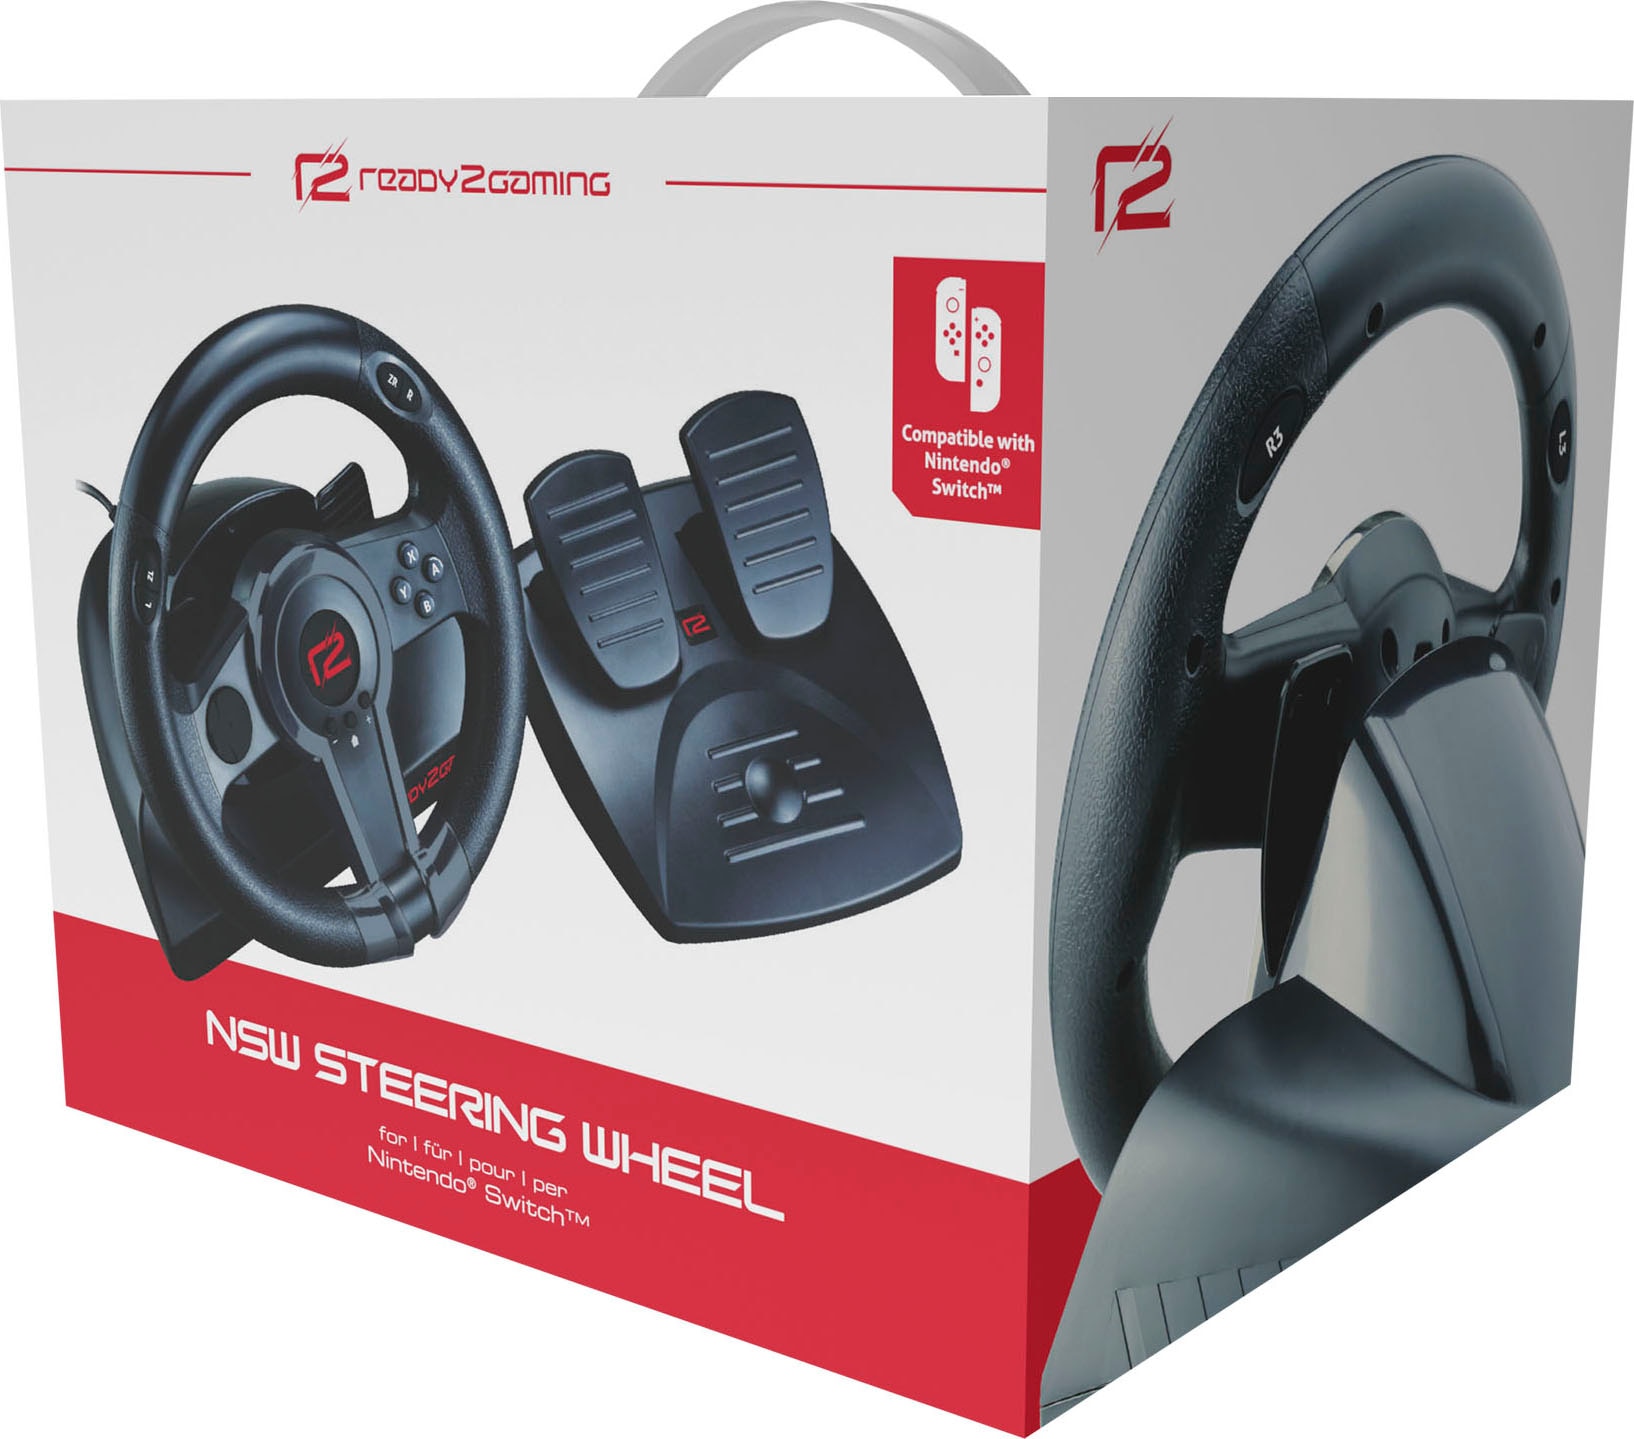 HORI Racing Wheel Pro Deluxe Lenkrad & Pedale (Schwarz) günstig